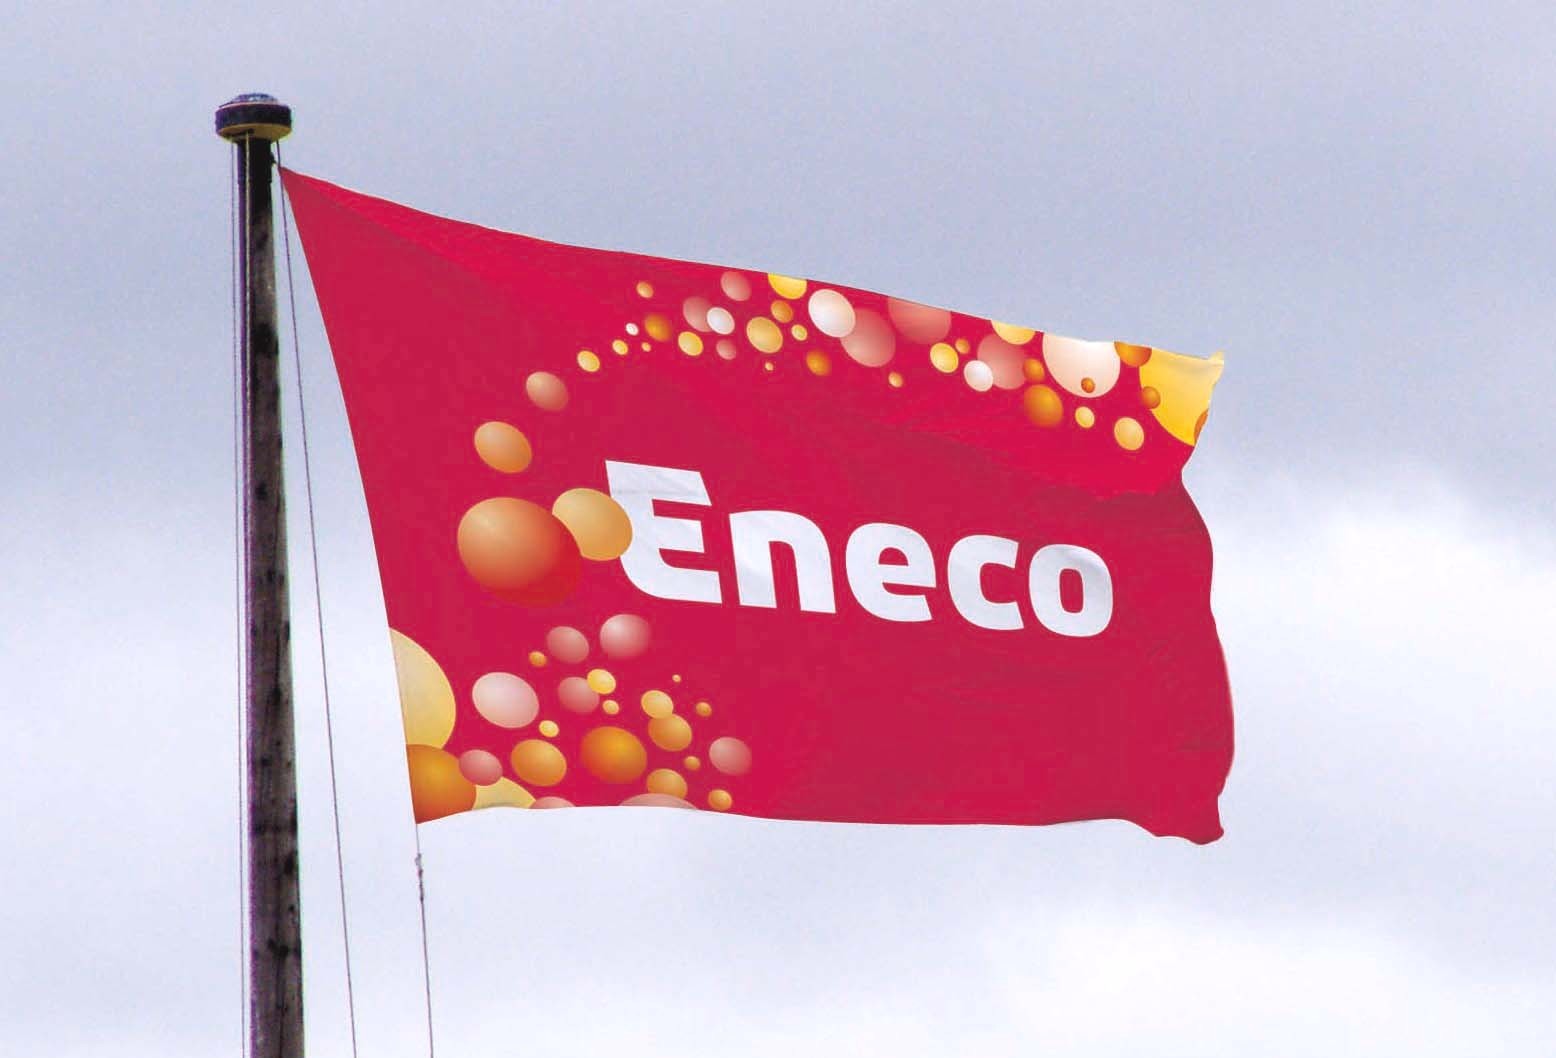 UK Plans Put Offshore Wind Investment under Risk, Says Eneco